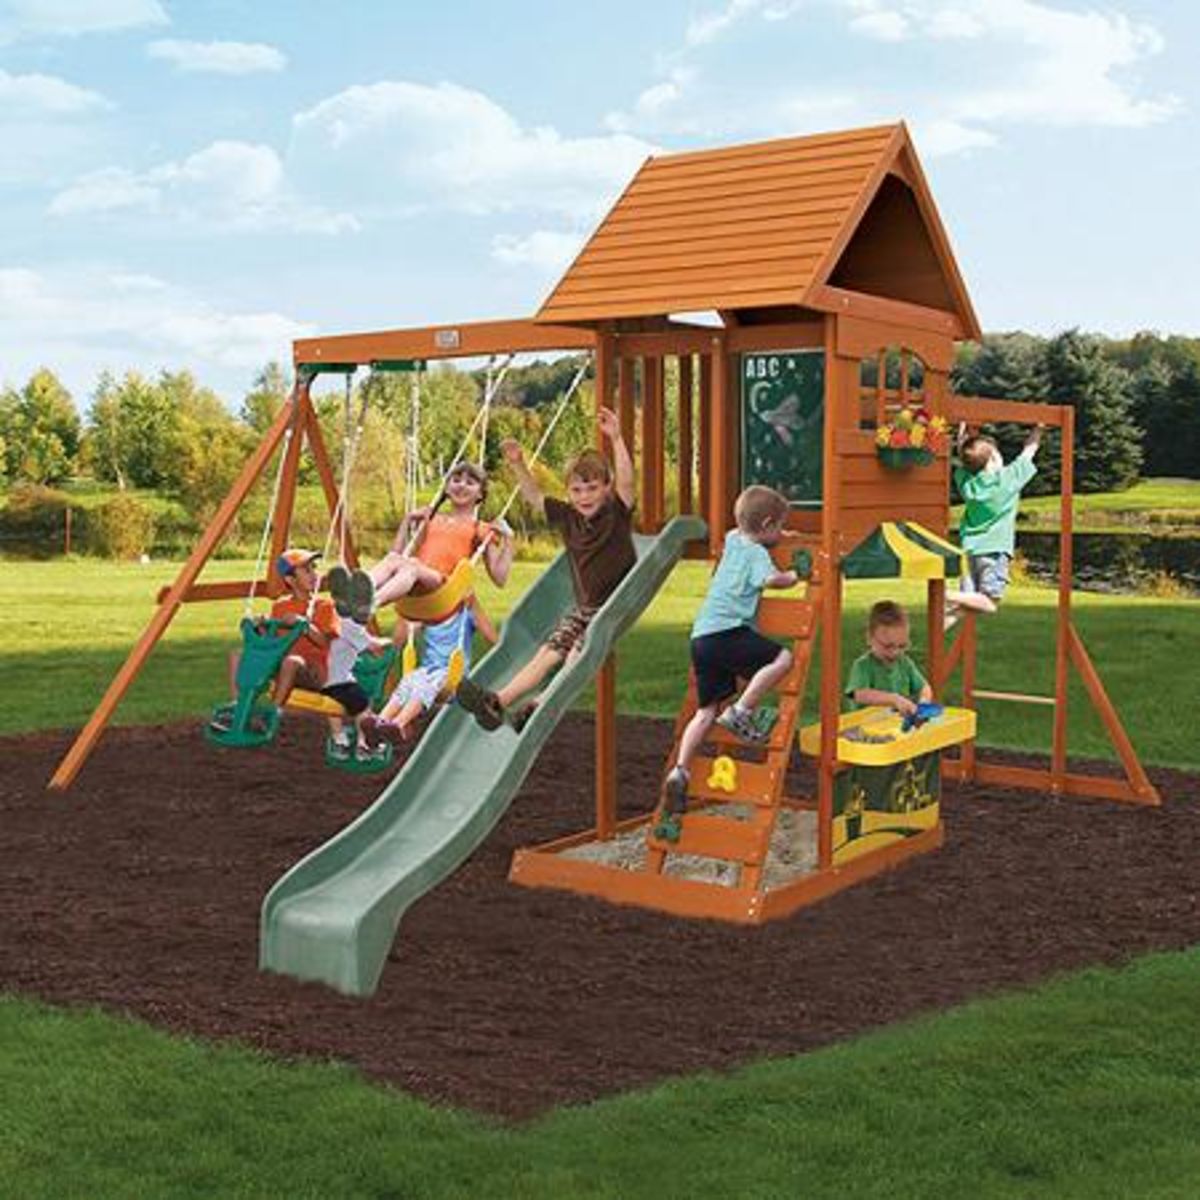 Best-Rated Wooden Backyard Swing Sets For Older Kids On ...